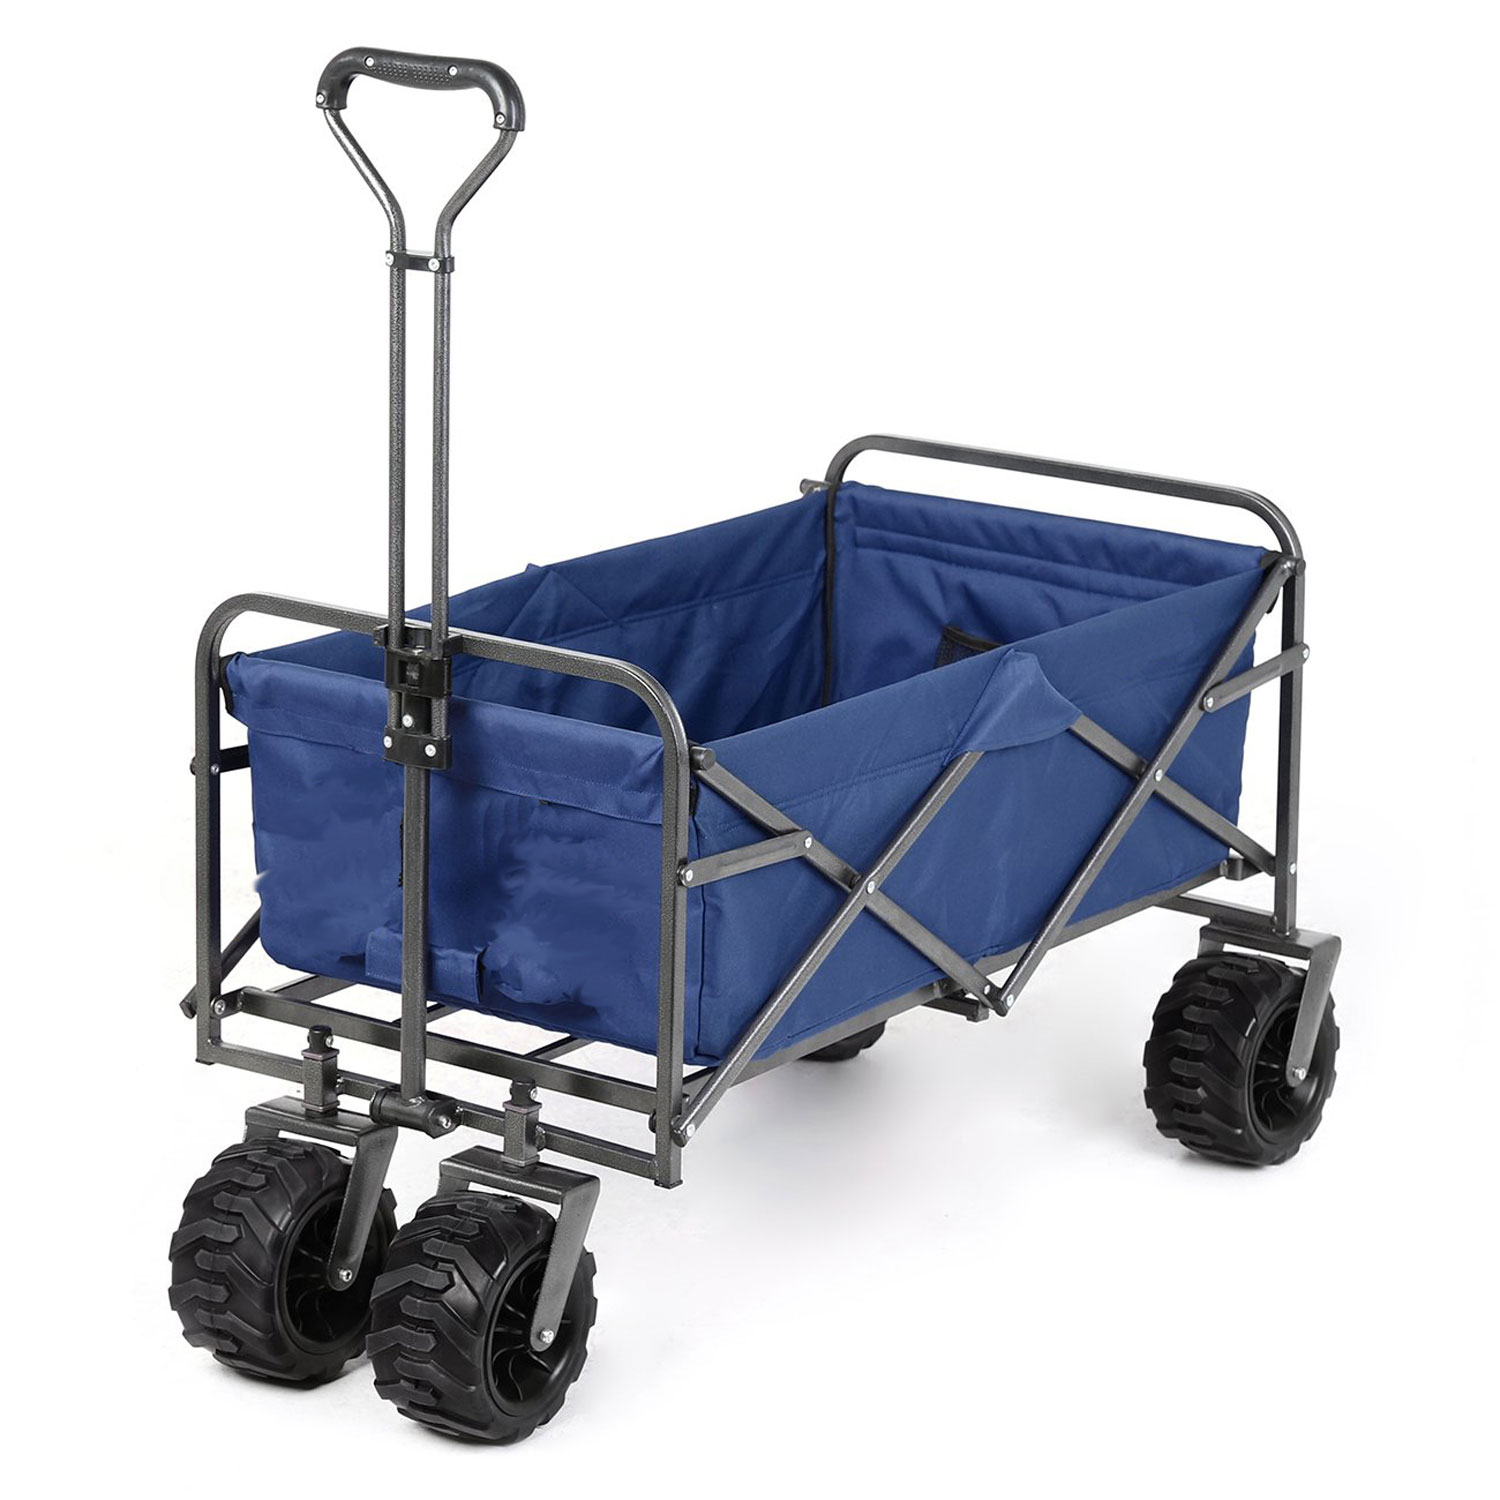 Blue Sekey Folding Wagon Cart with Brake Collapsible Outdoor Utility Wagon Garden Shopping Cart Beach Wagon with All-Terrain Wheels 265 Pound Capacity 